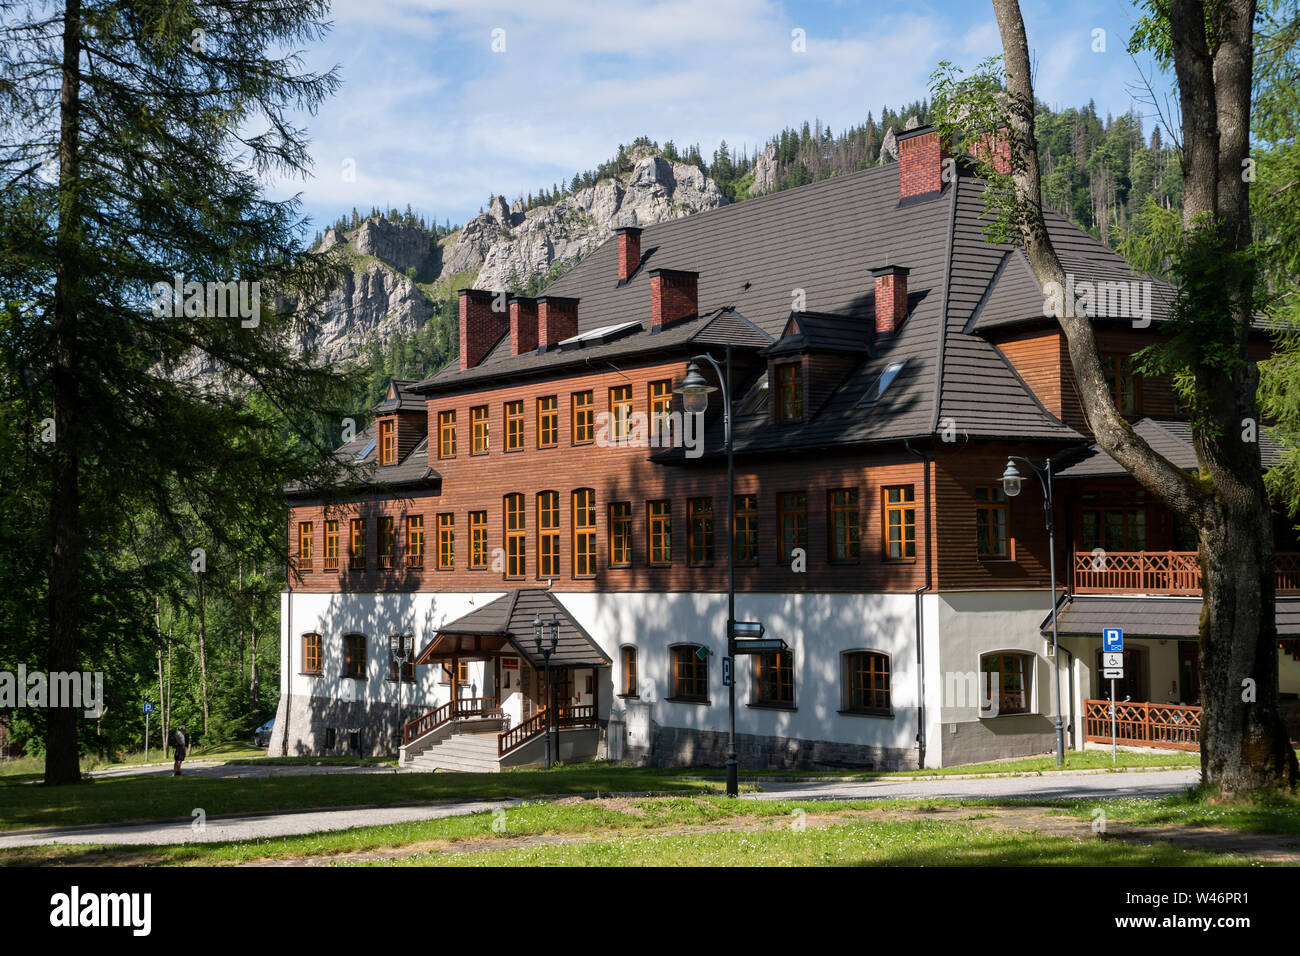 Historic building in Tatra National Park, Kuznice, Poland Stock Photo